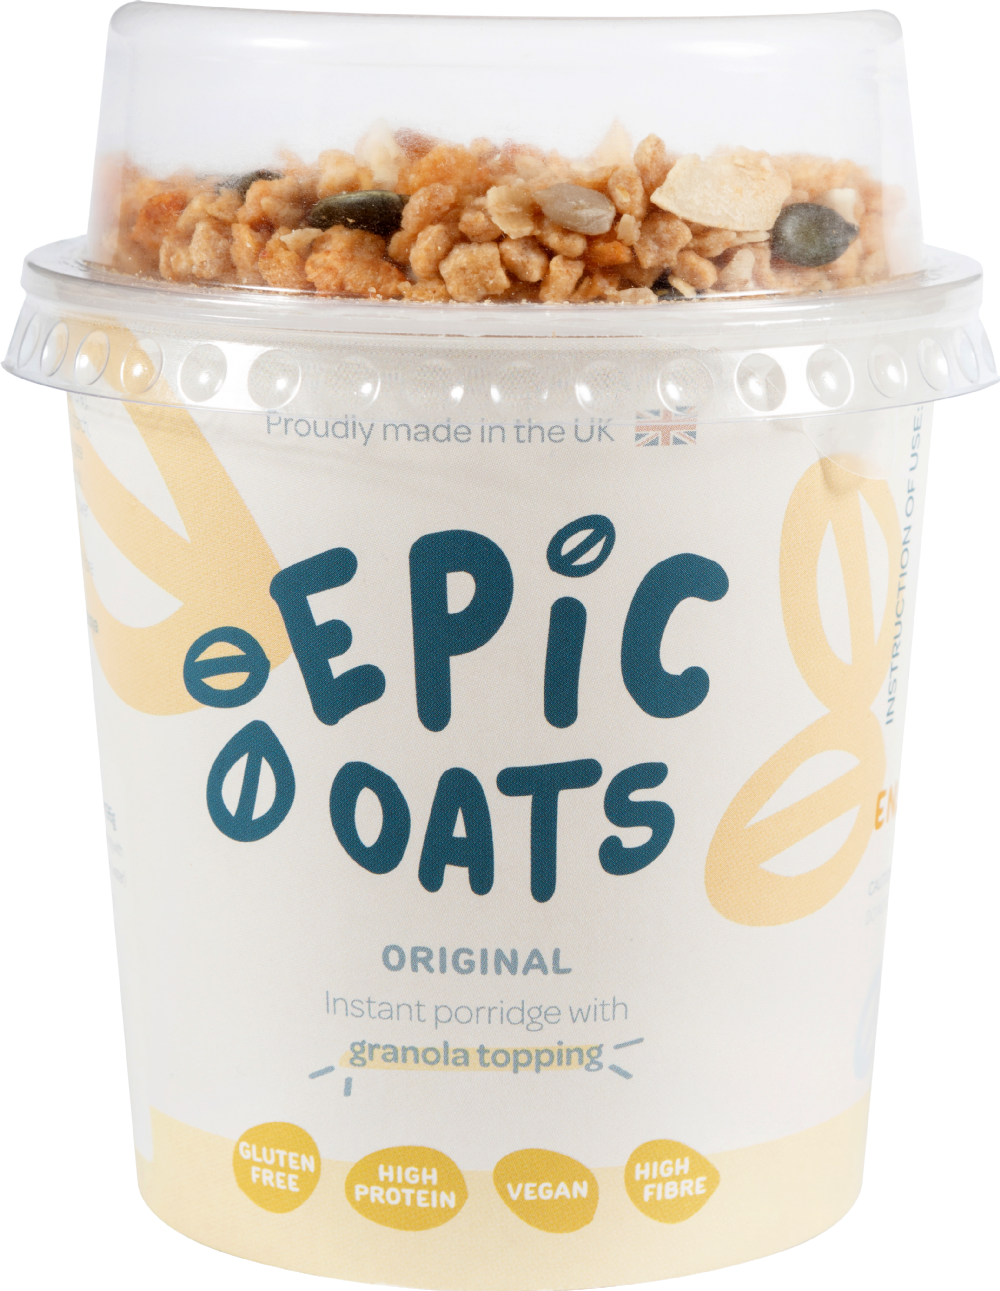 EPIC OATS Instant Porridge / Granola Topping - Original 60g